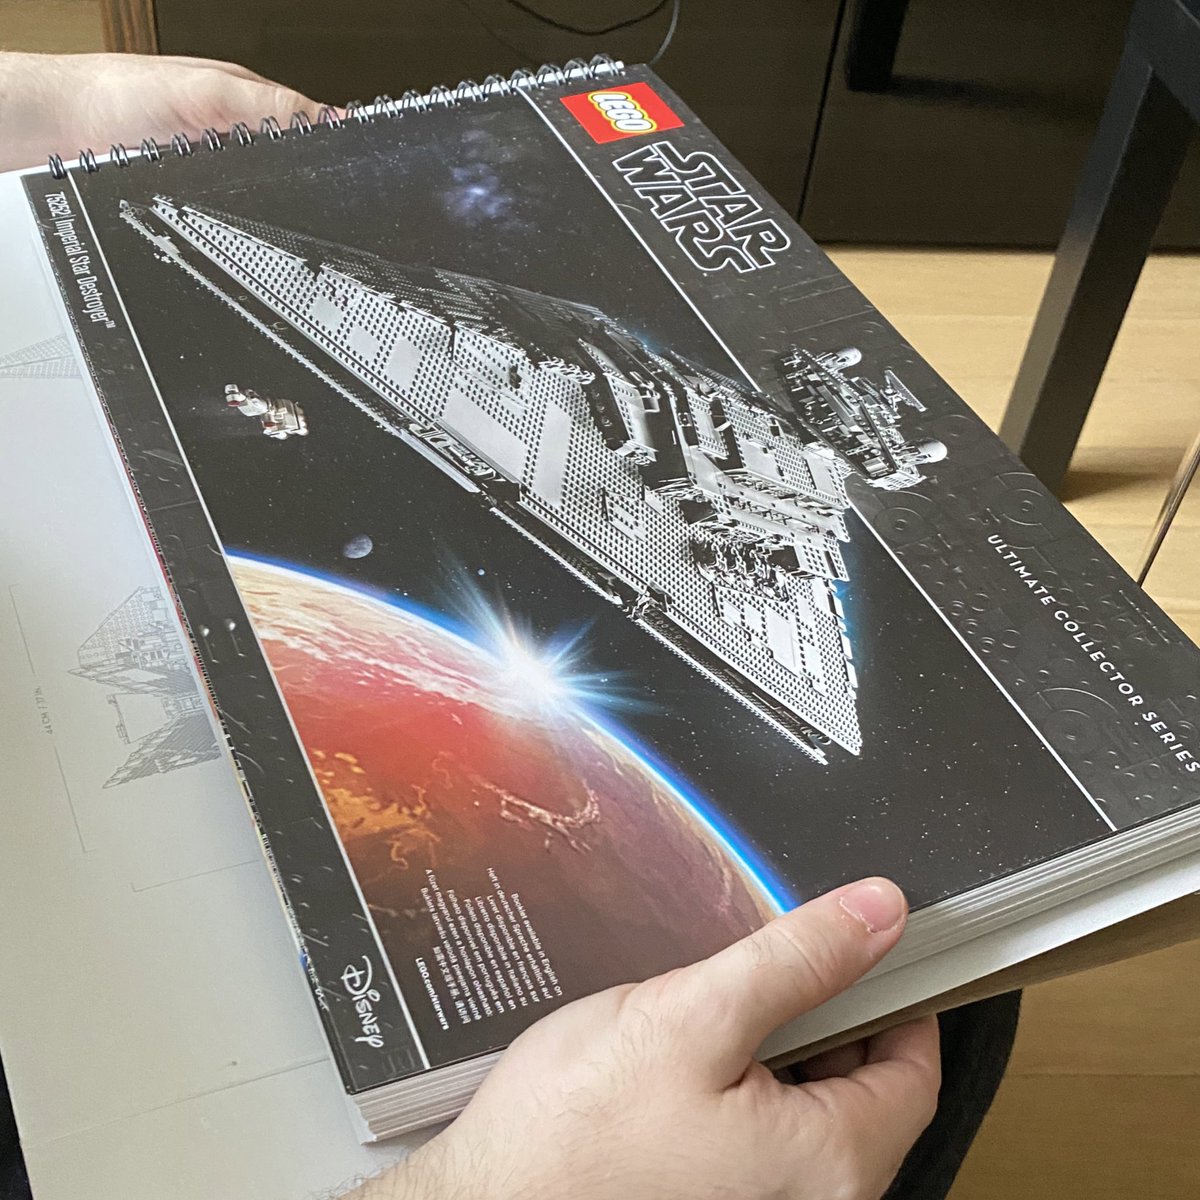 Lego Star Wars 75252 Imperial Star Destroyer